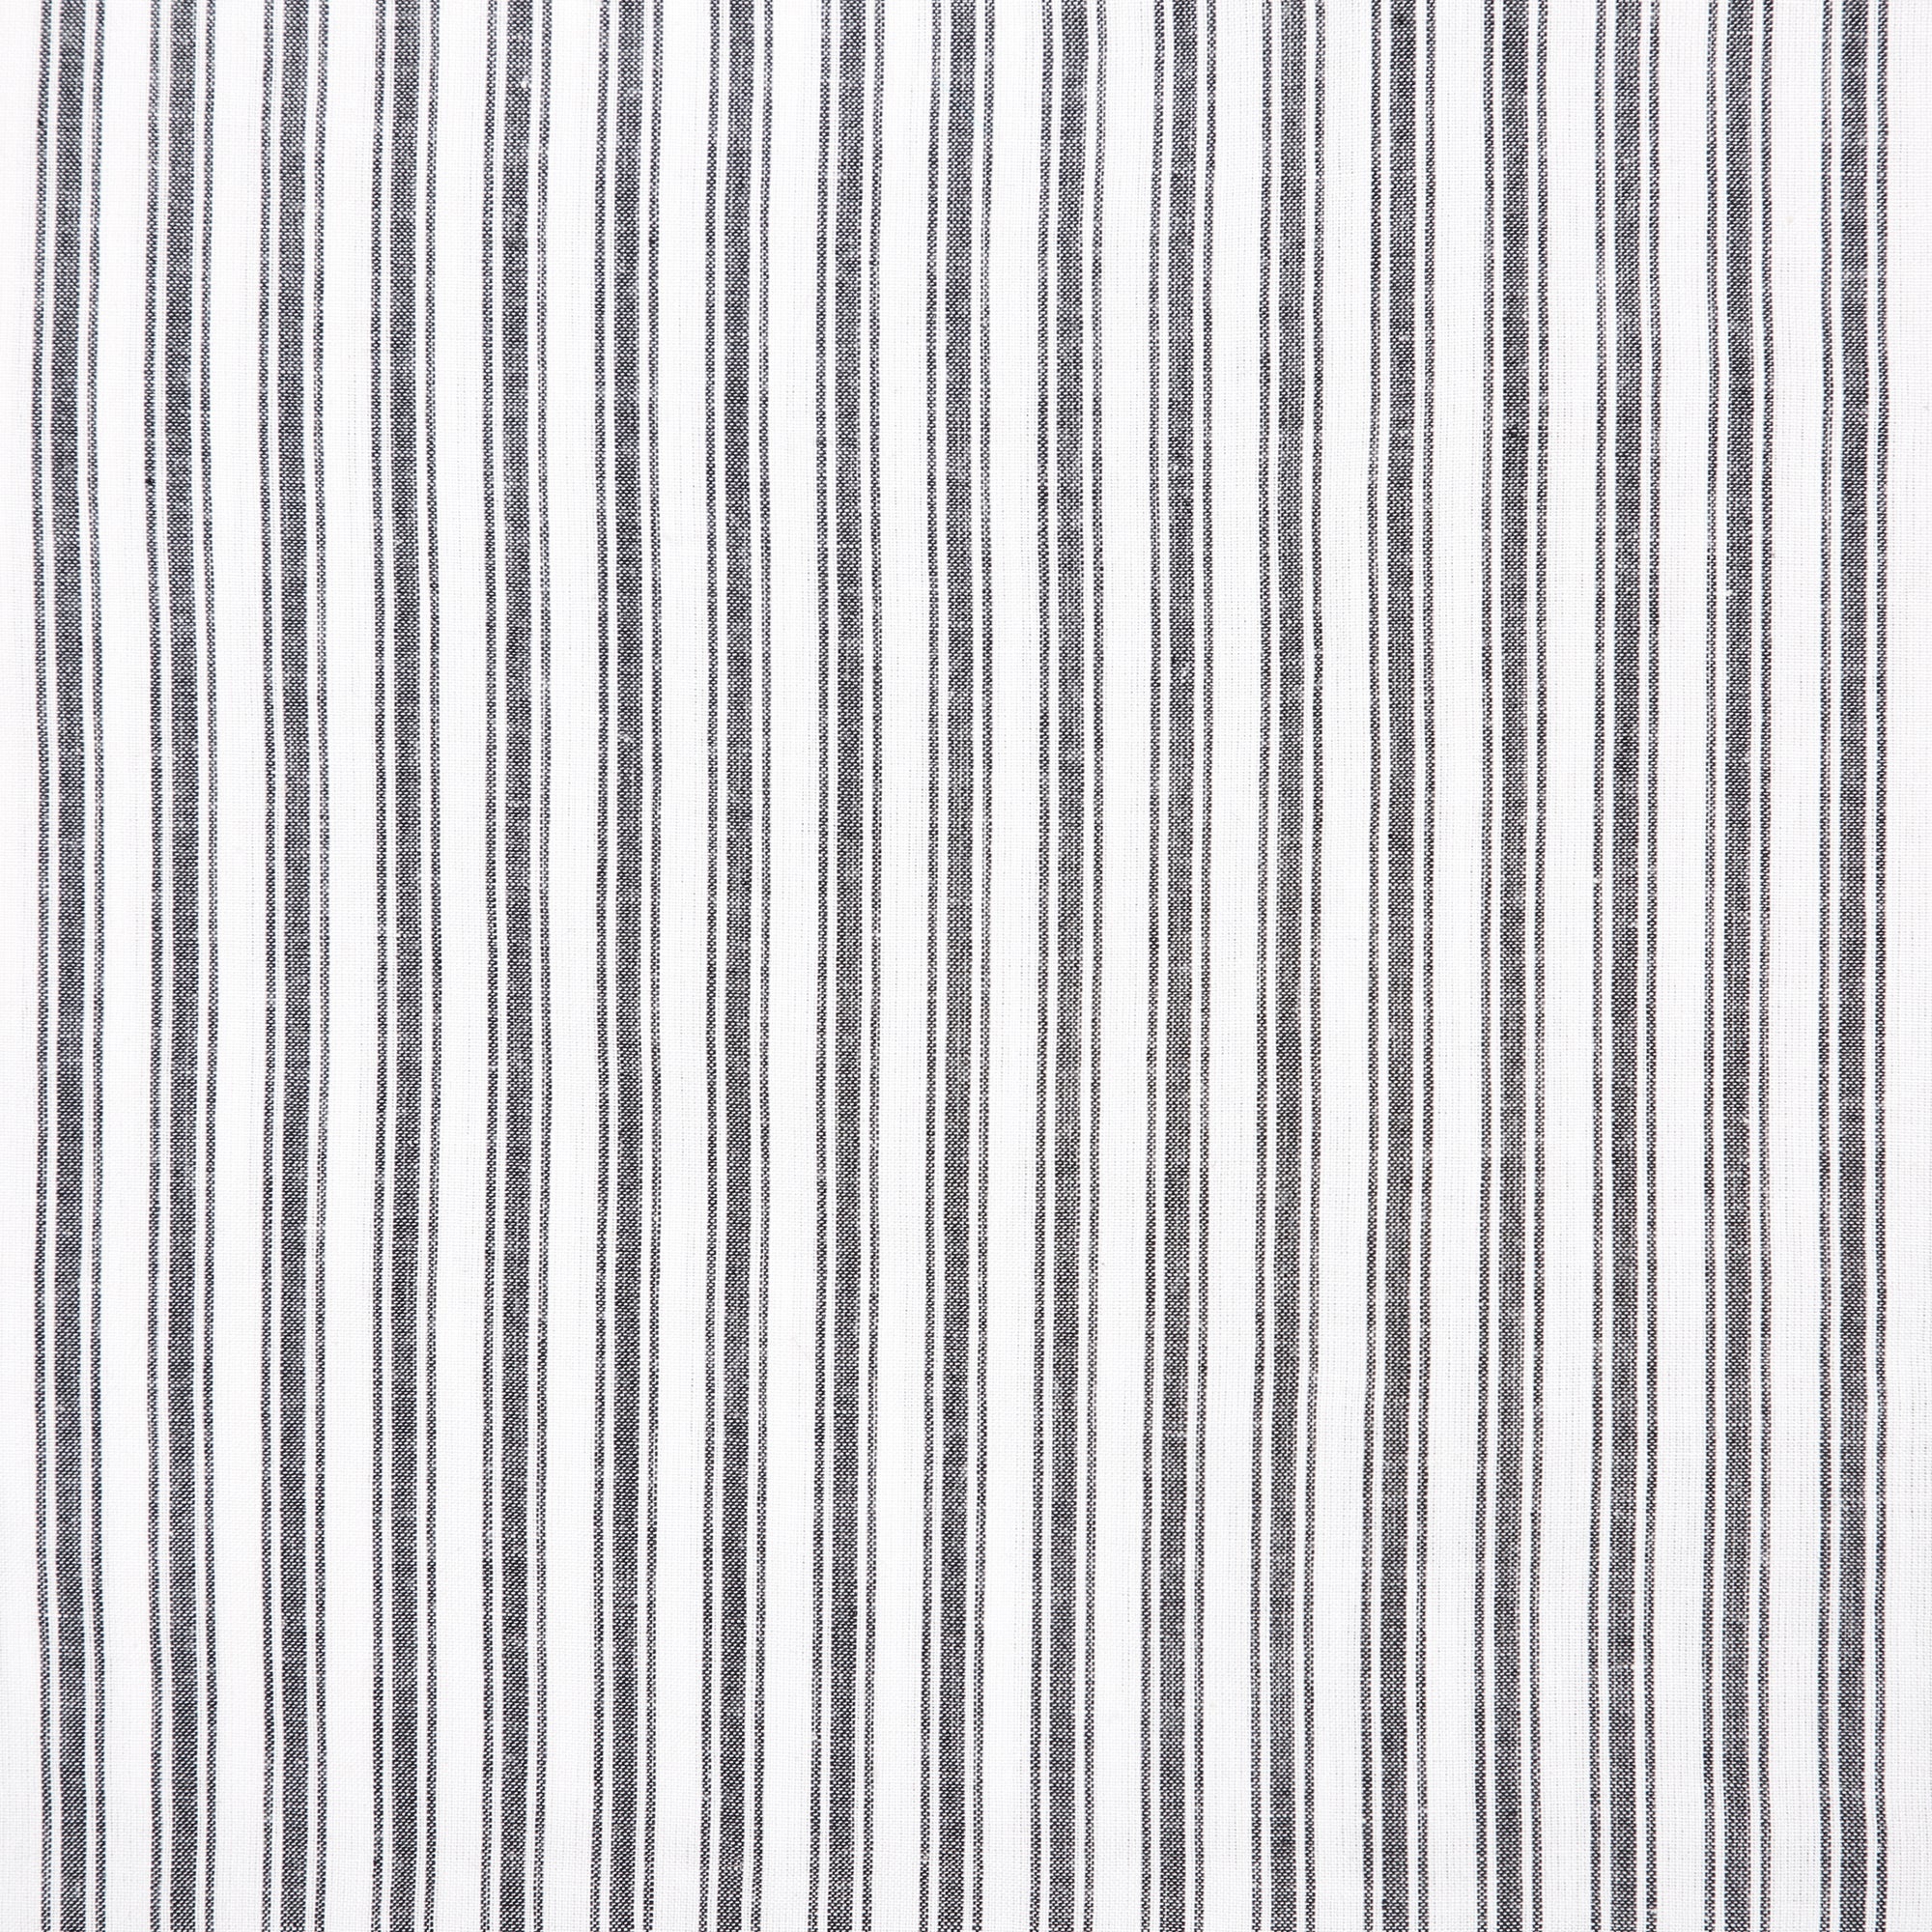 Sawyer Mill Black Ruffled Ticking Stripe Pillow 14x22 VHC Brands